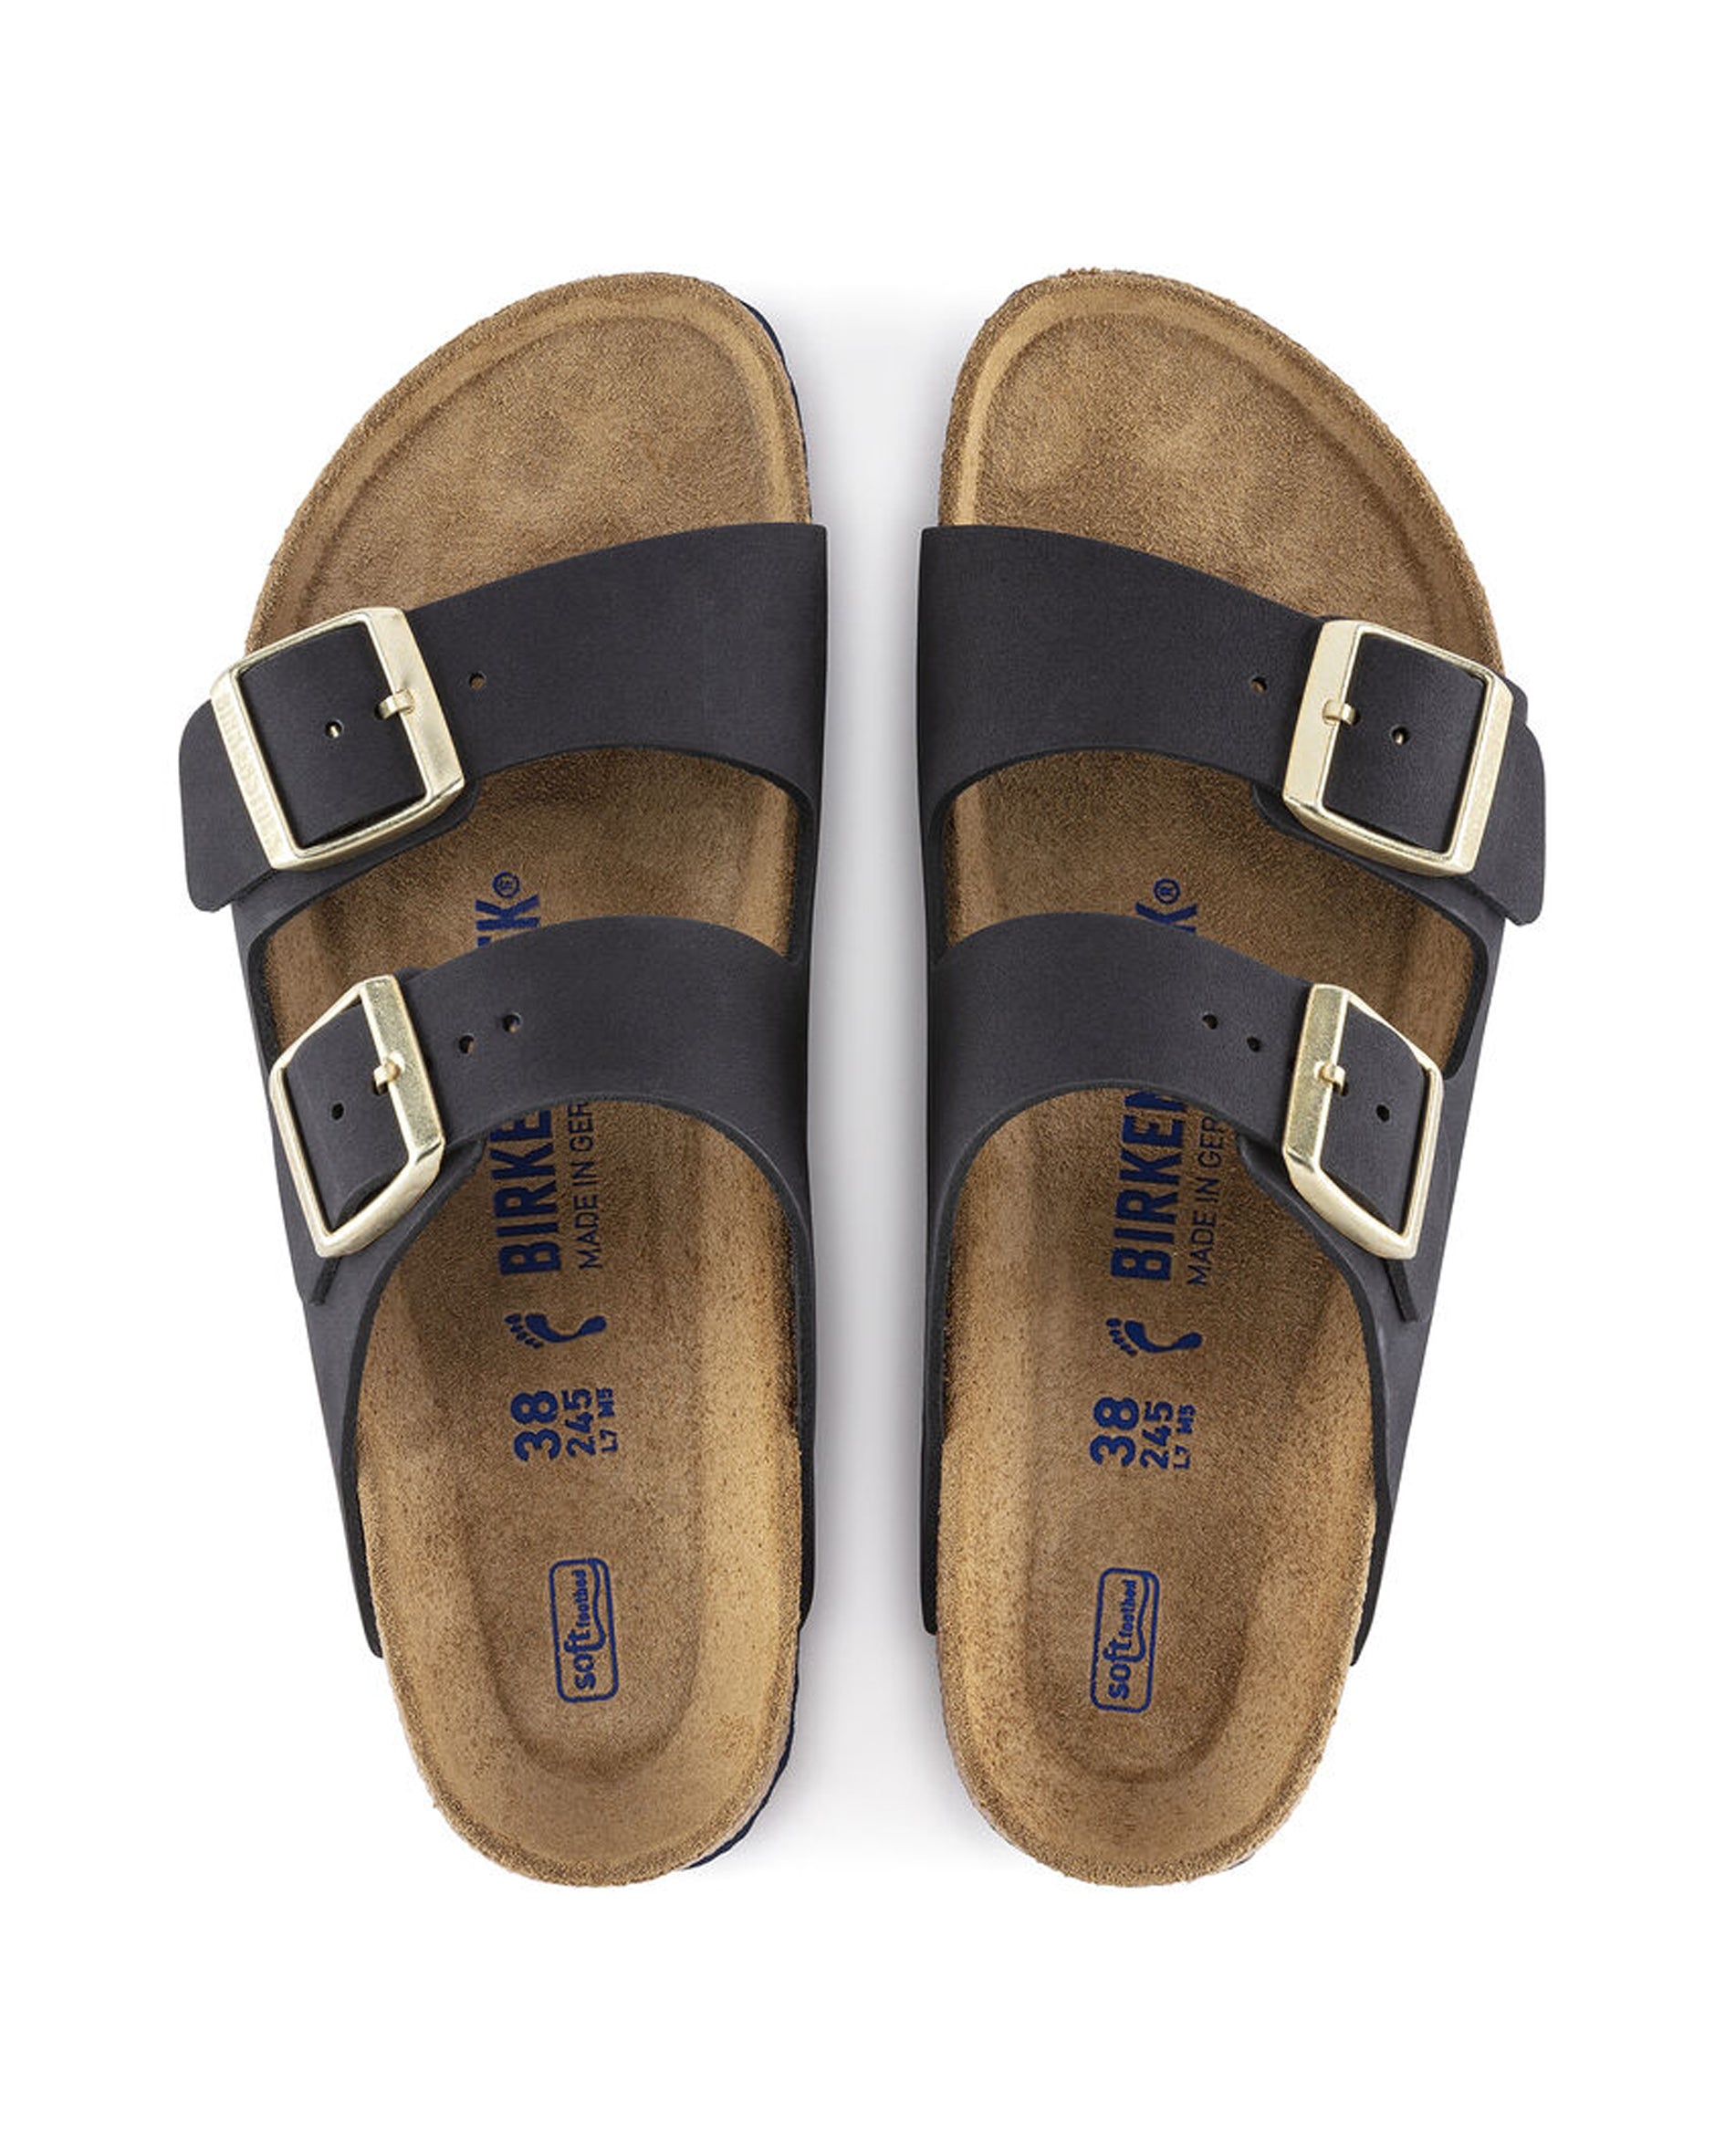 Arizona Soft Footbed Midnight Nubuck Leather Sandals